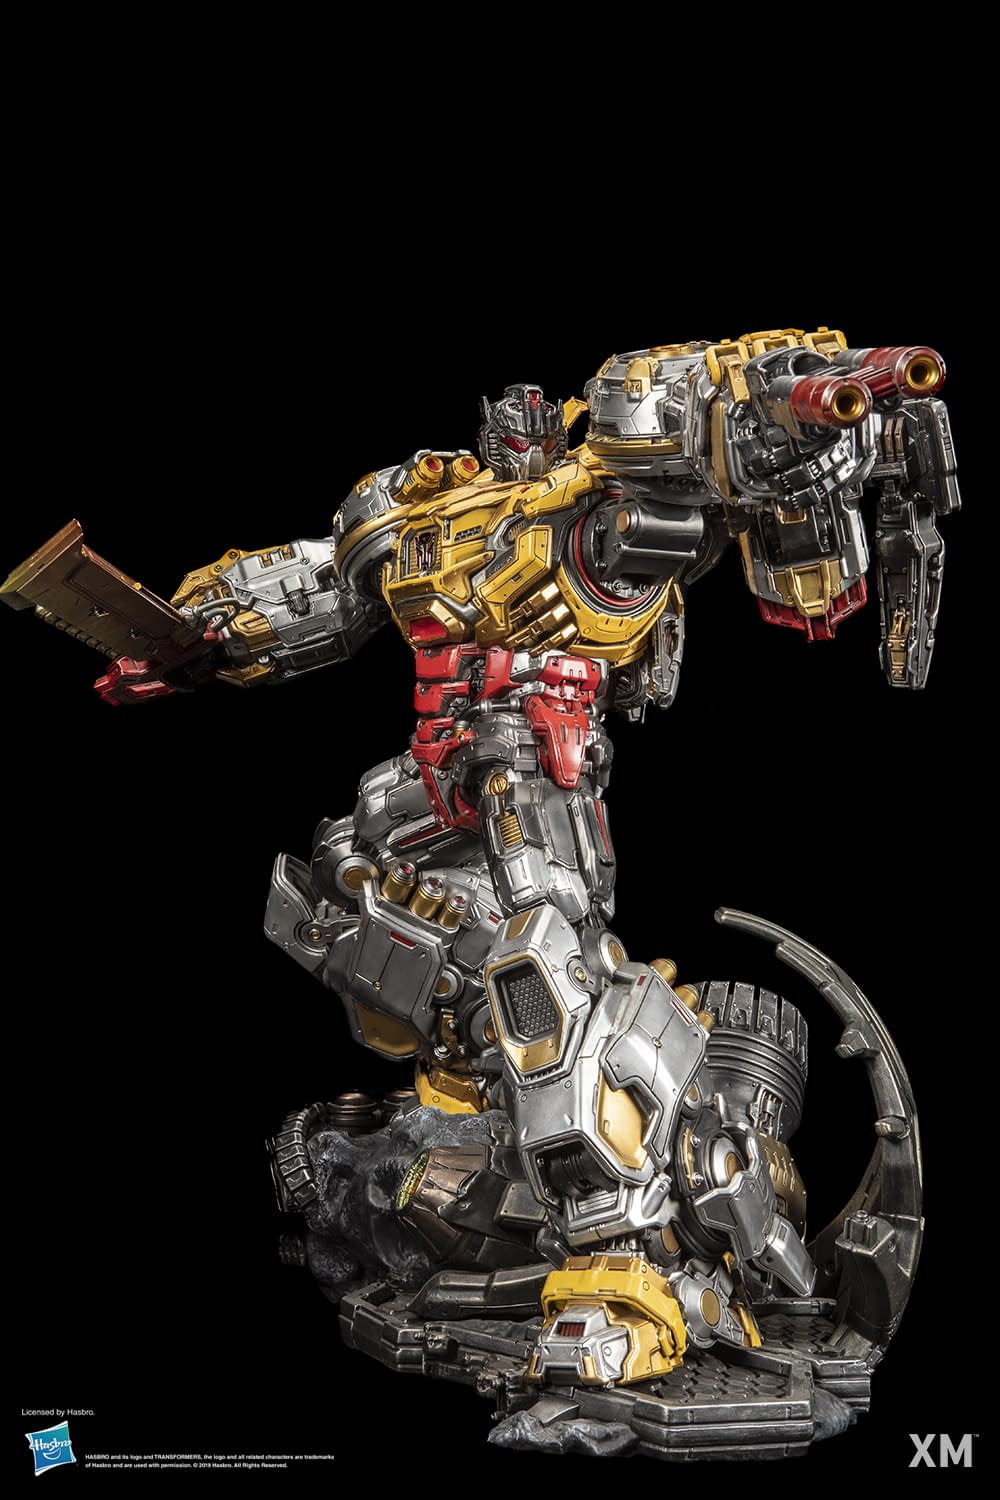 Transformers Grimlock Statue from XM Studios